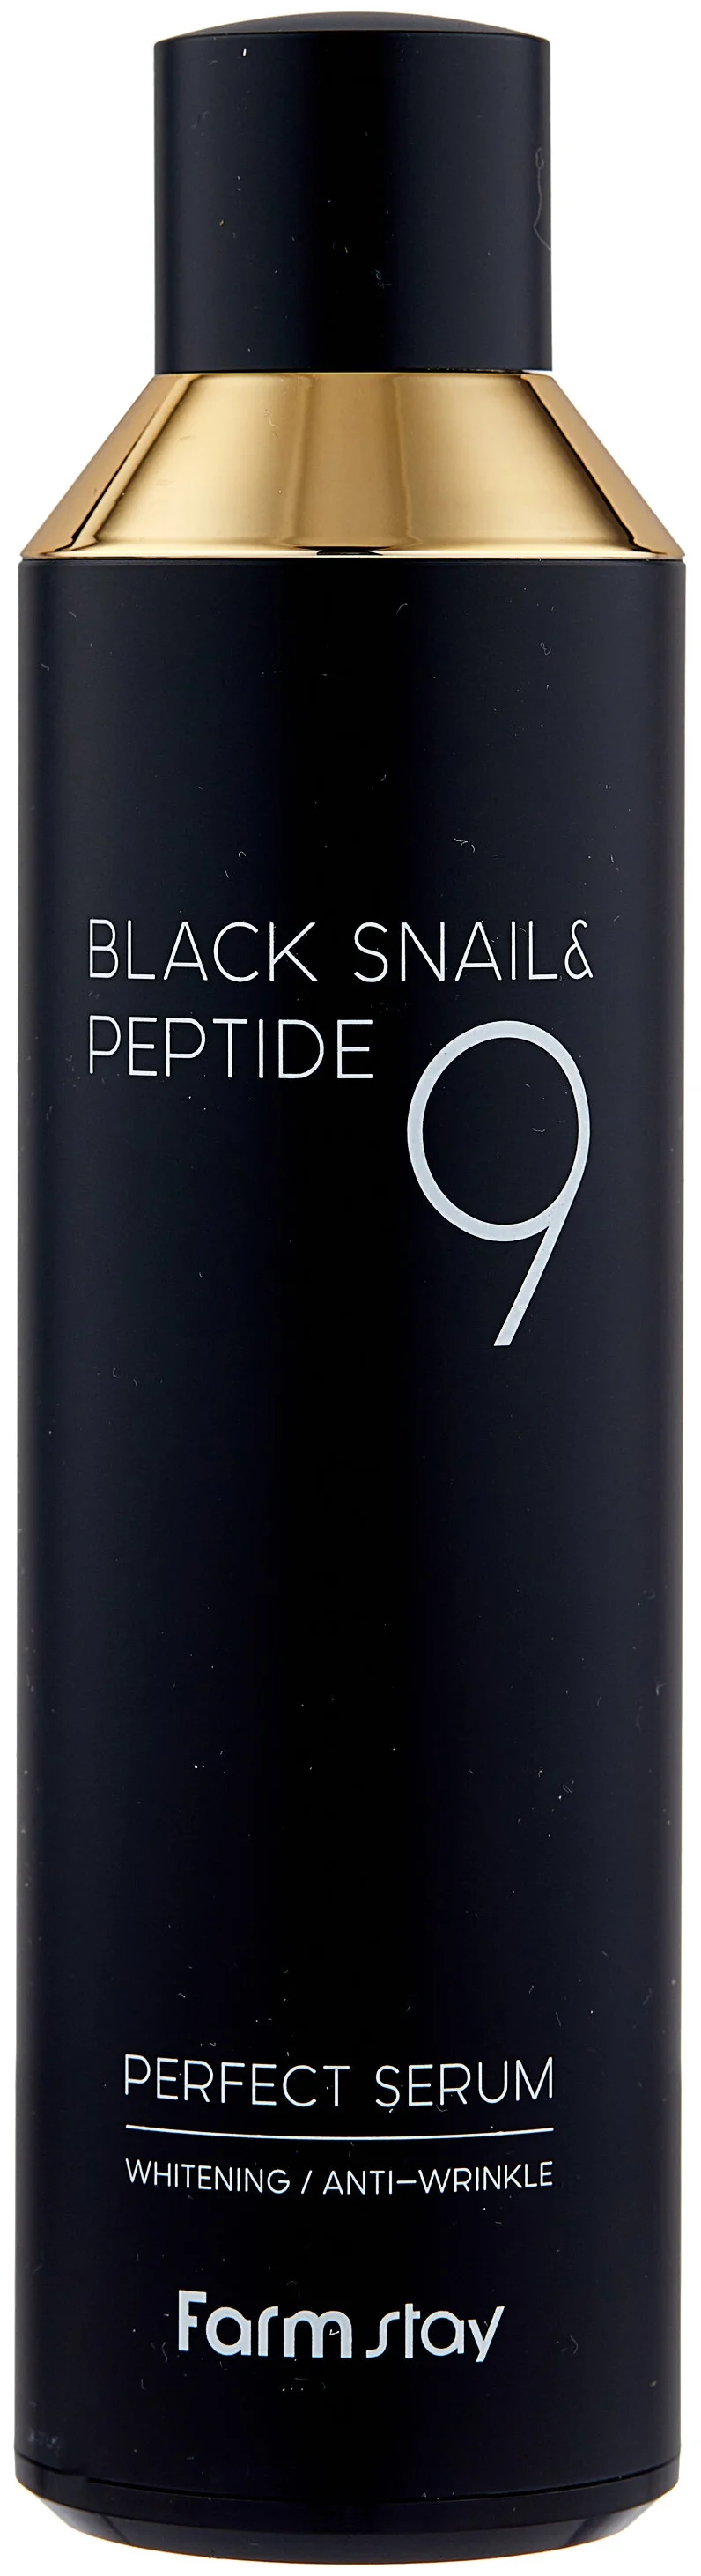 Farmstay Black Snail & Peptide 9 Perfect Serum